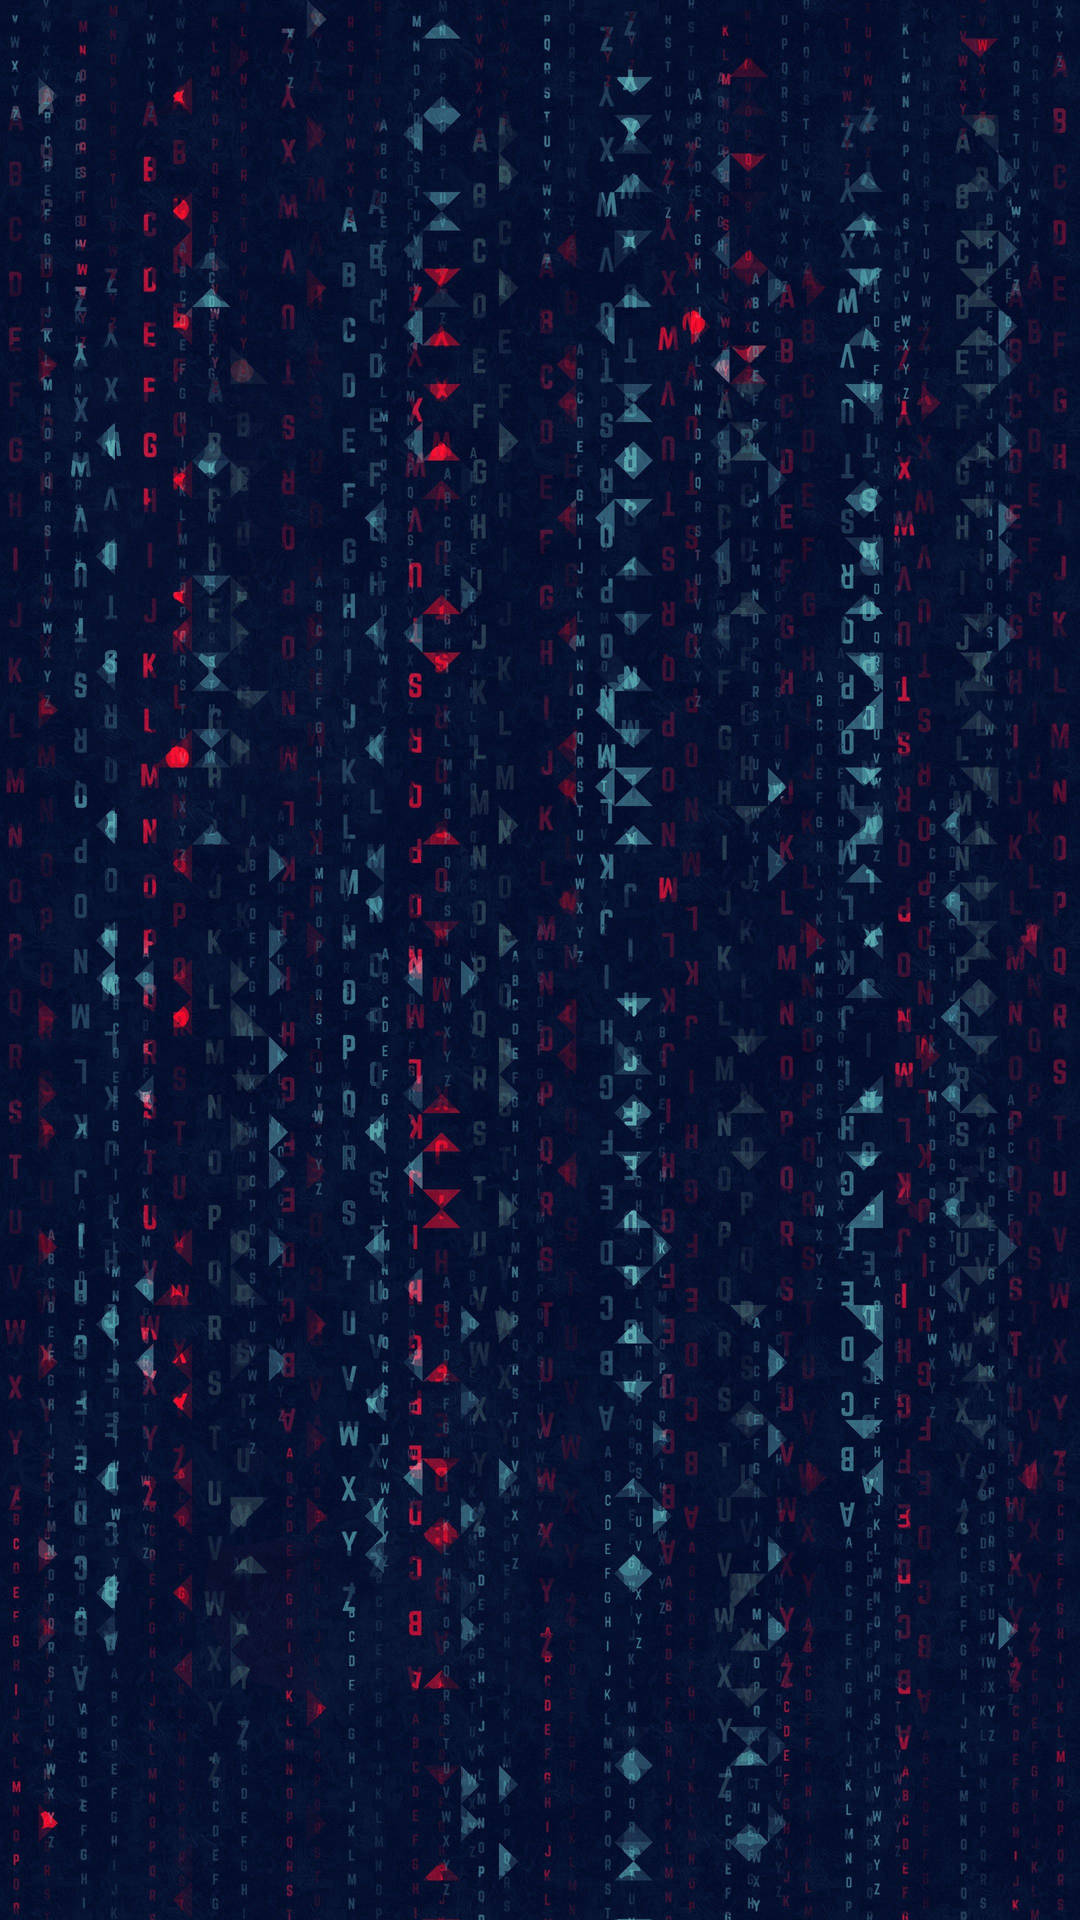 Matrix 2160X3840 Wallpaper and Background Image